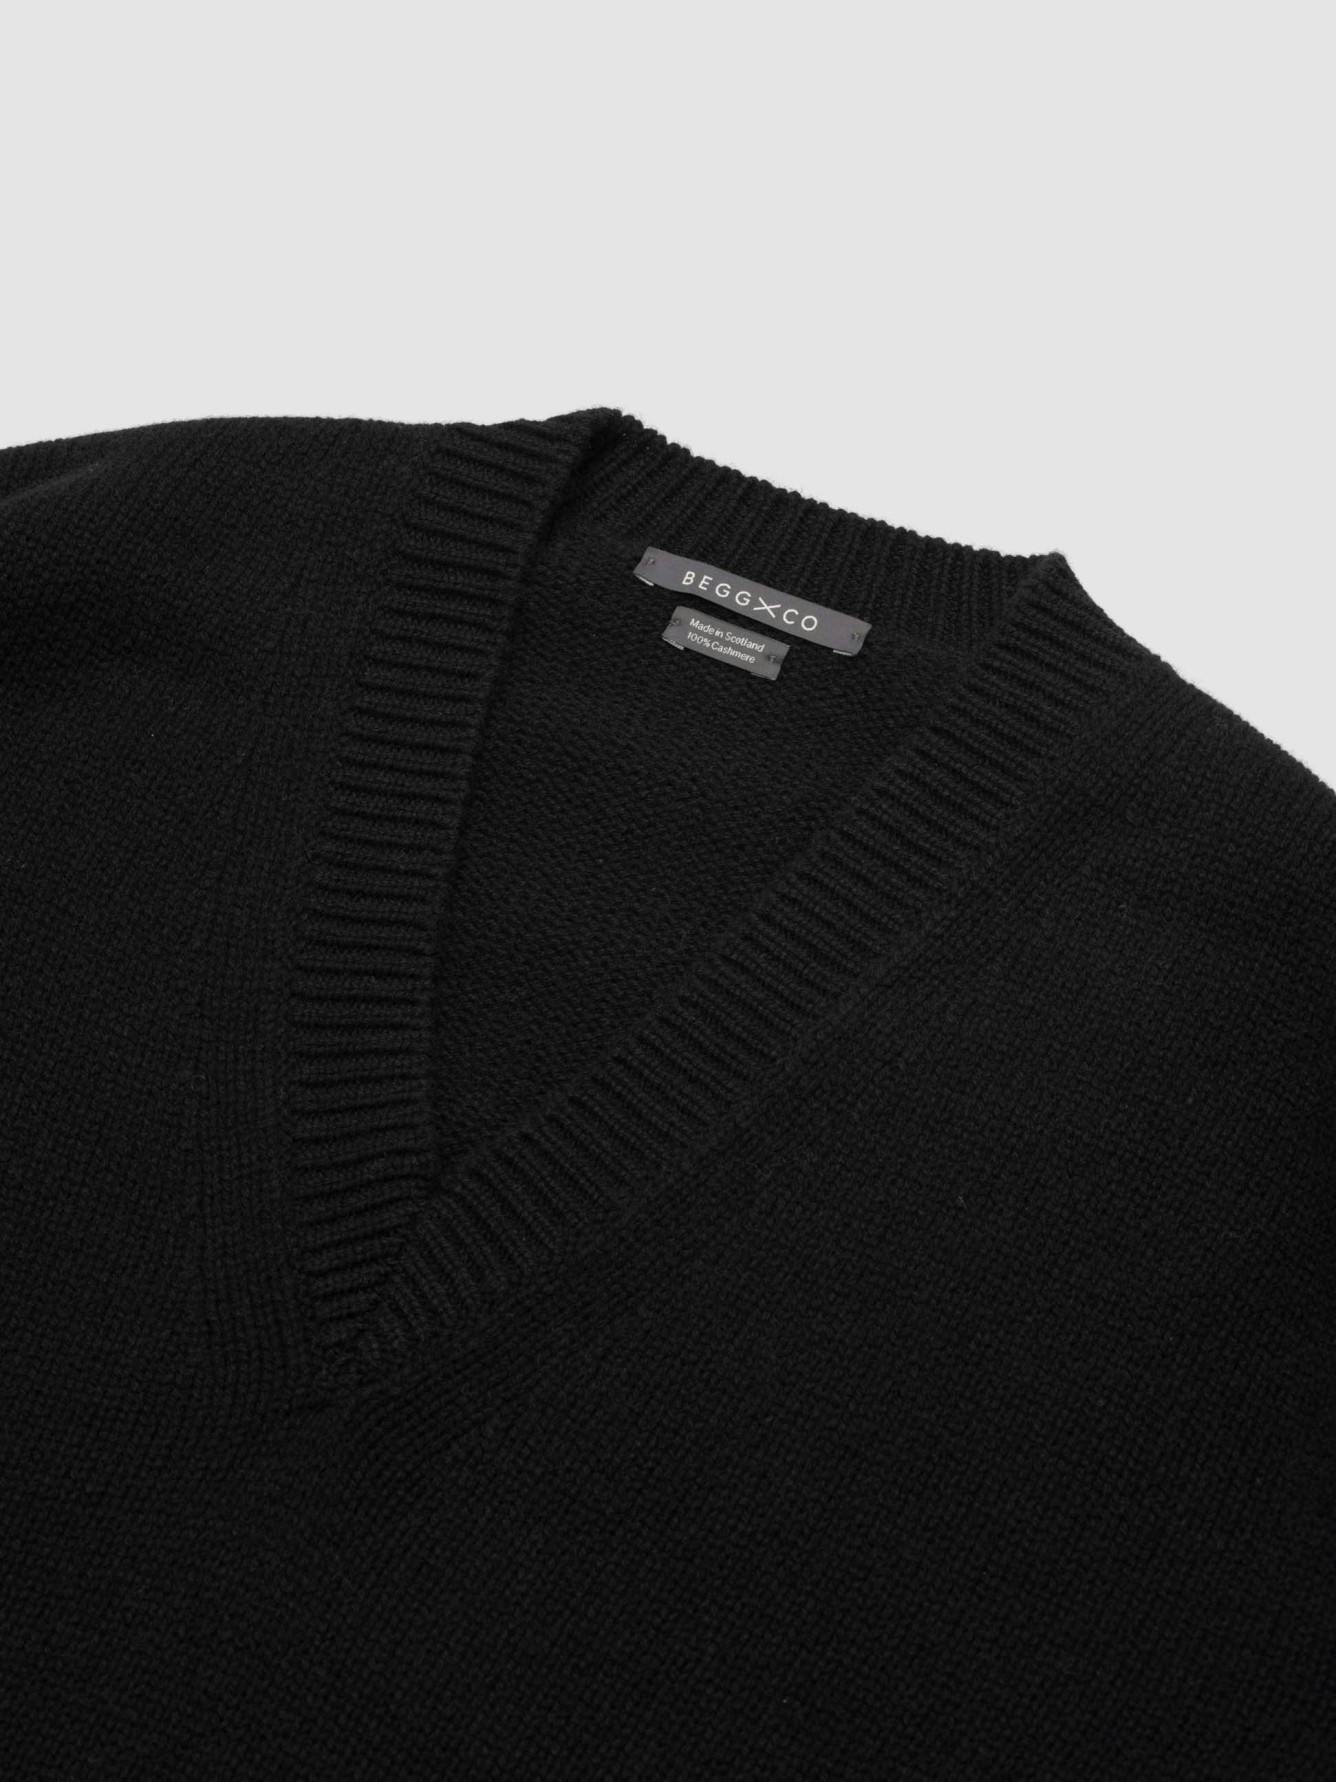 Mens Sloane Knitted Cashmere V-Neck Sweater Black| Begg x Co